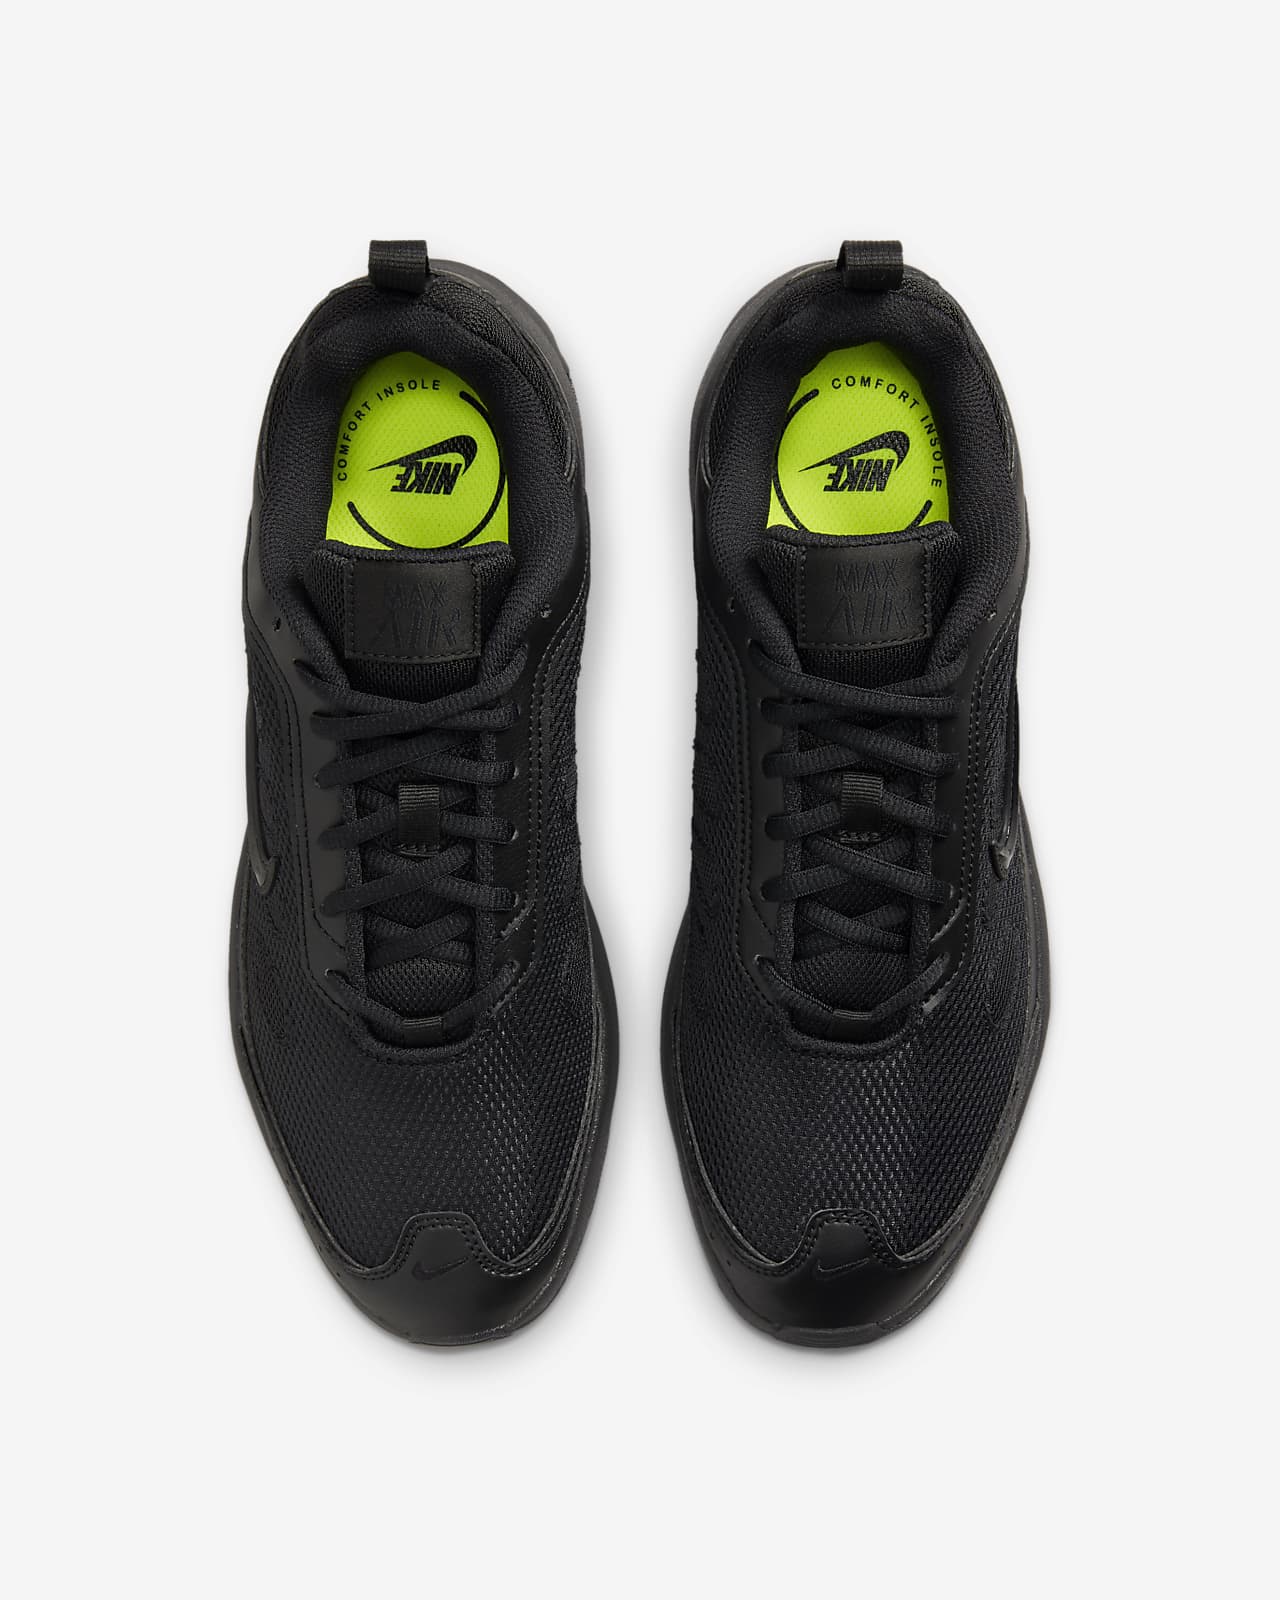 Max AP Shoes. Nike NZ